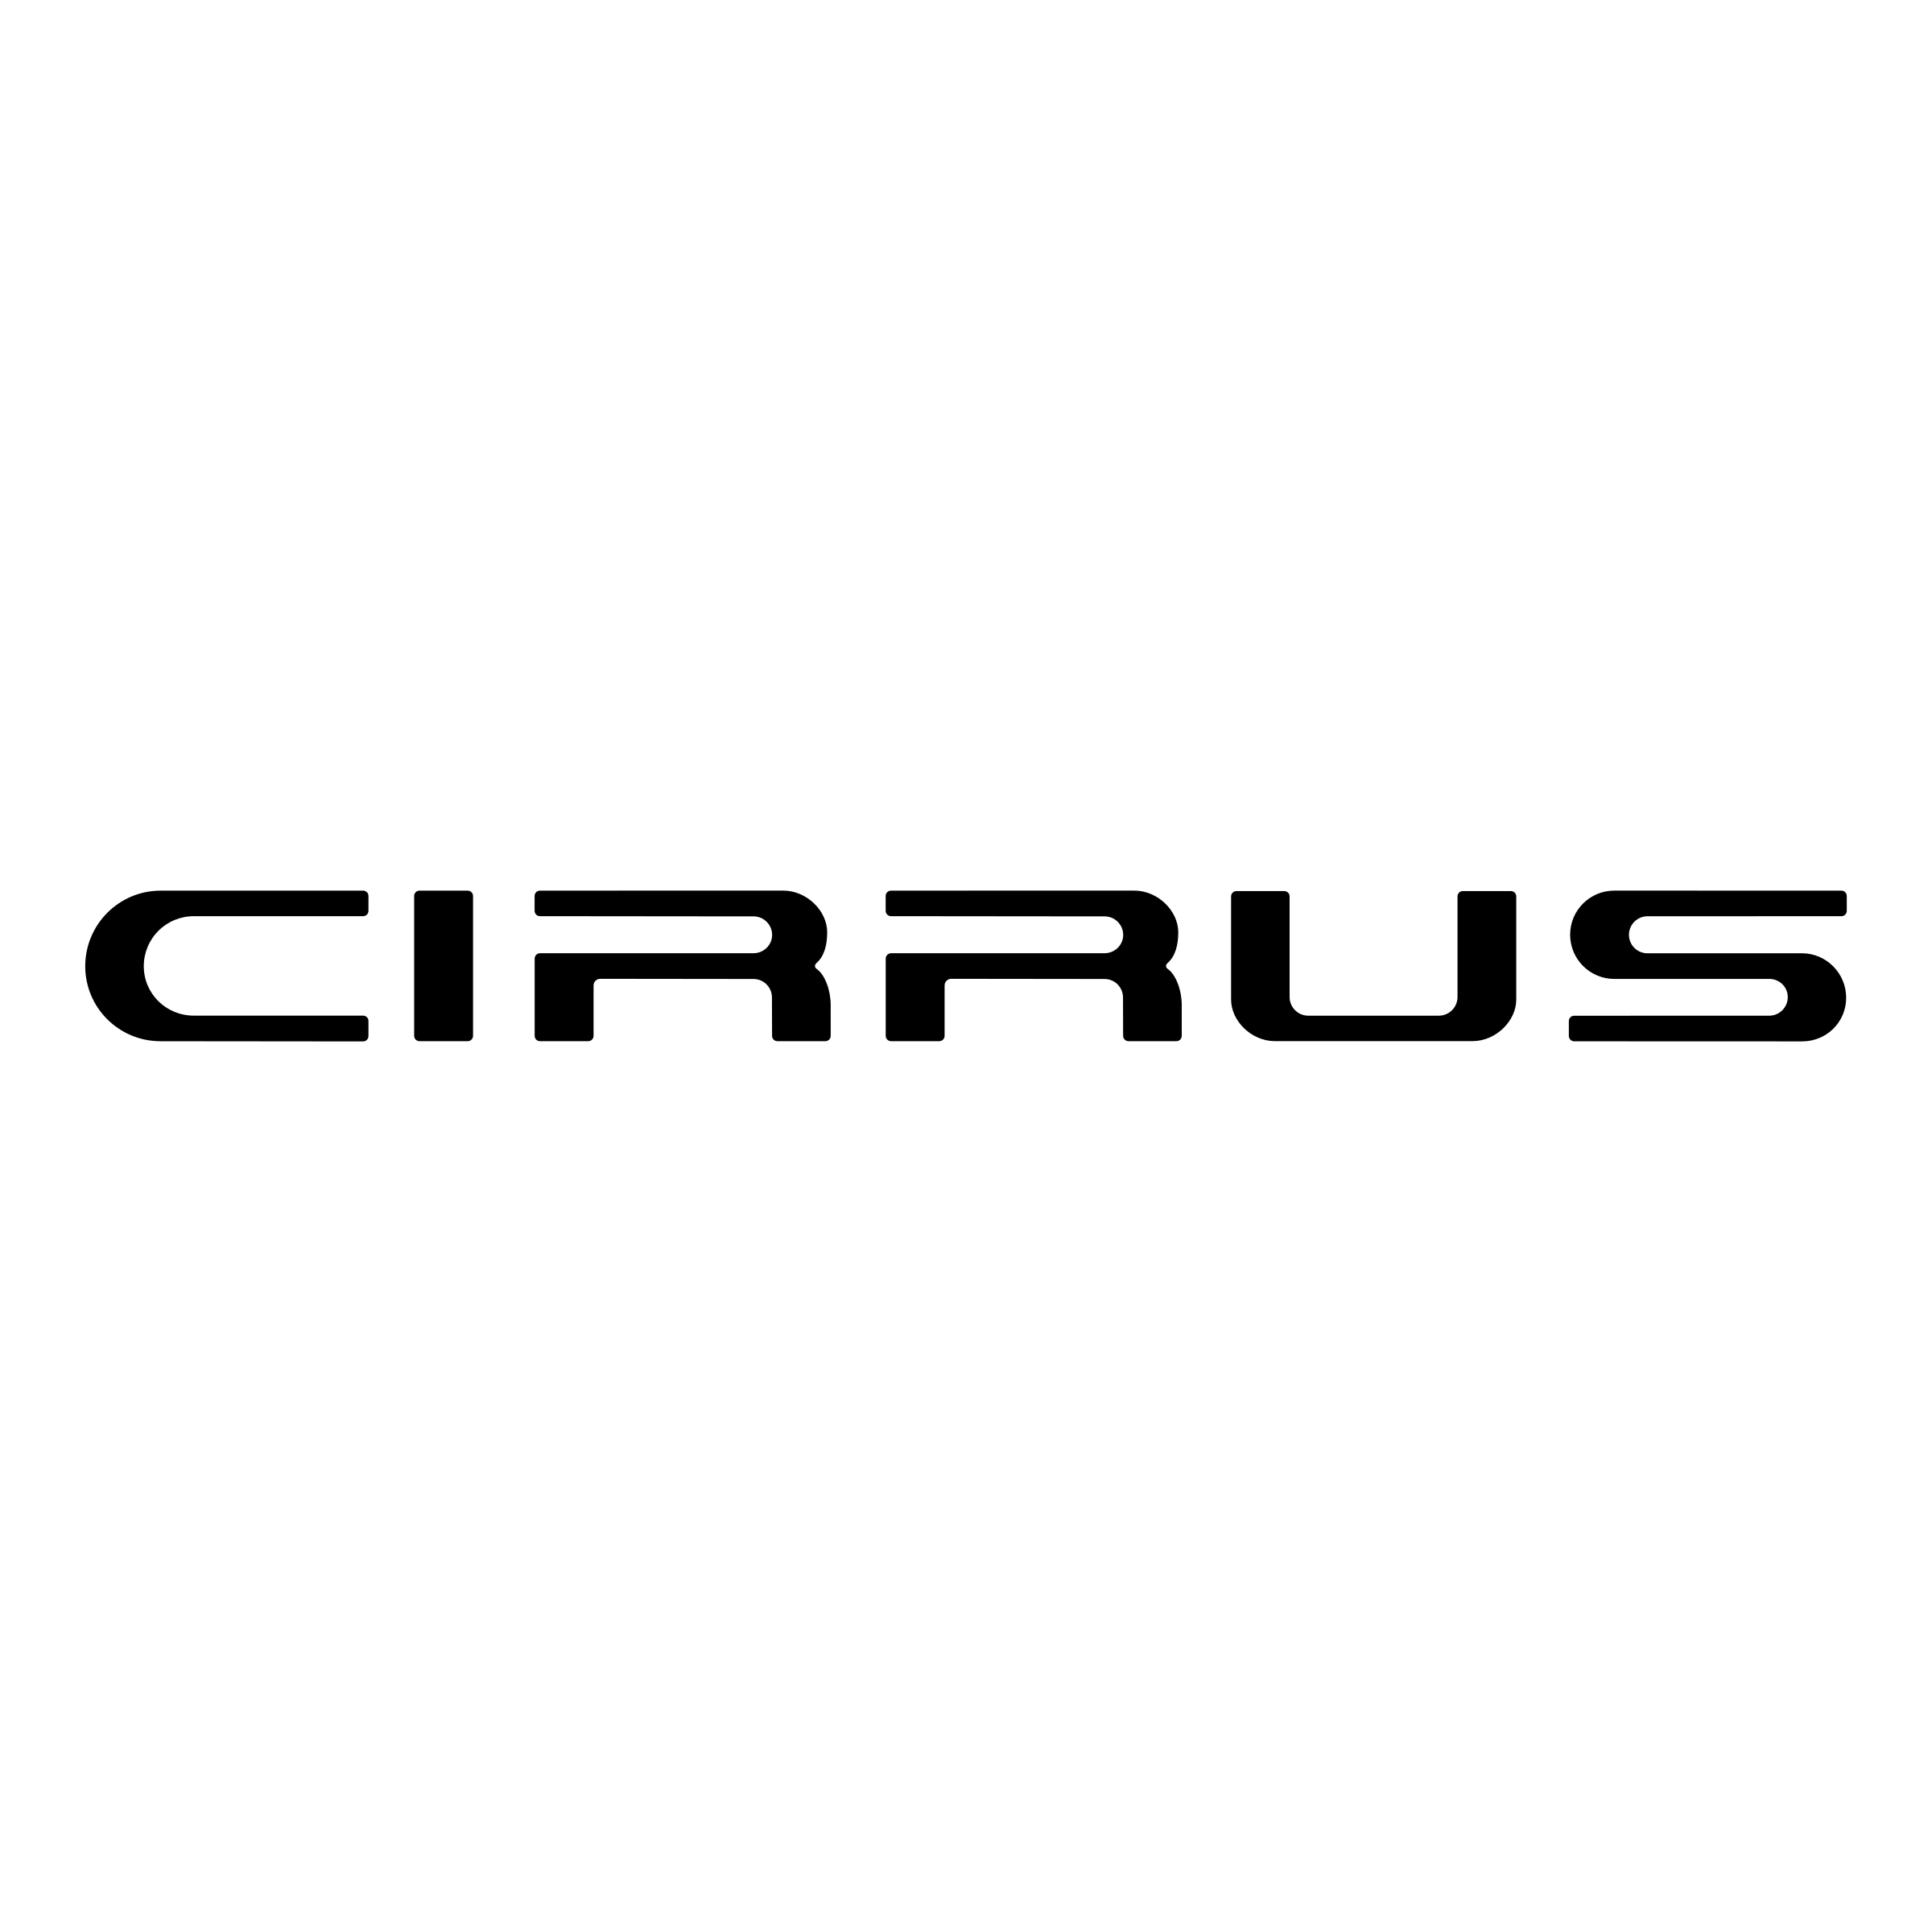 Cirrus Logo - Cirrus Logo PNG Transparent & SVG Vector - Freebie Supply